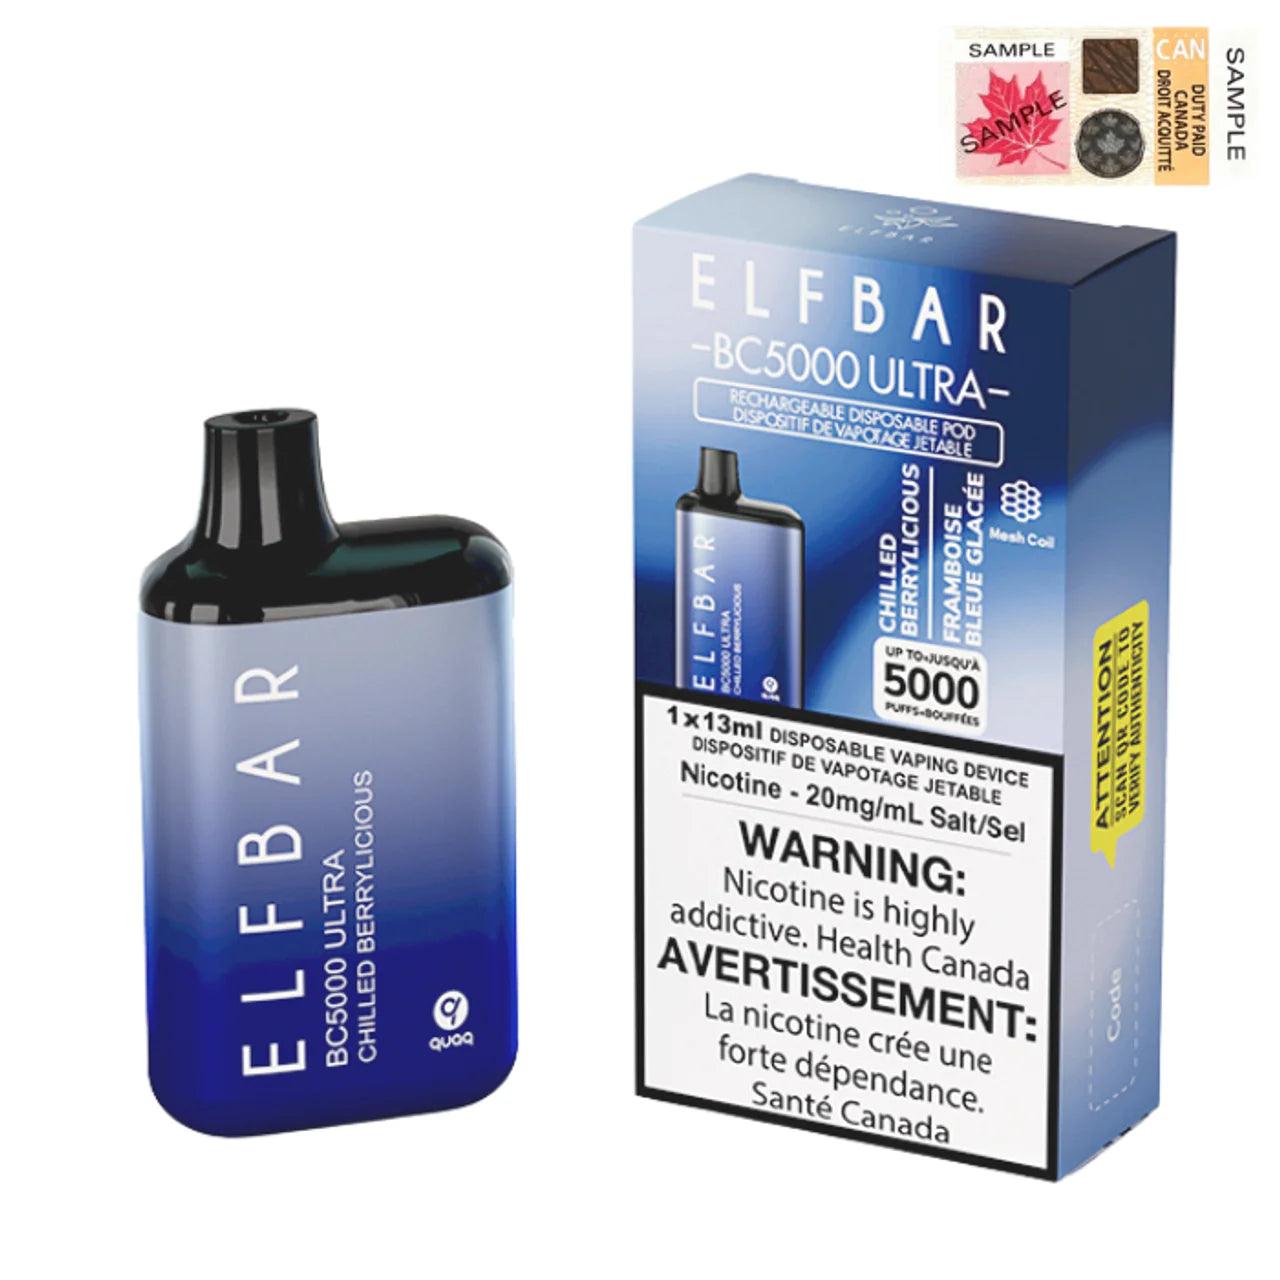 Elfbar BC5000 Ultra - Chilled Berrylicious - Vapor Shoppe